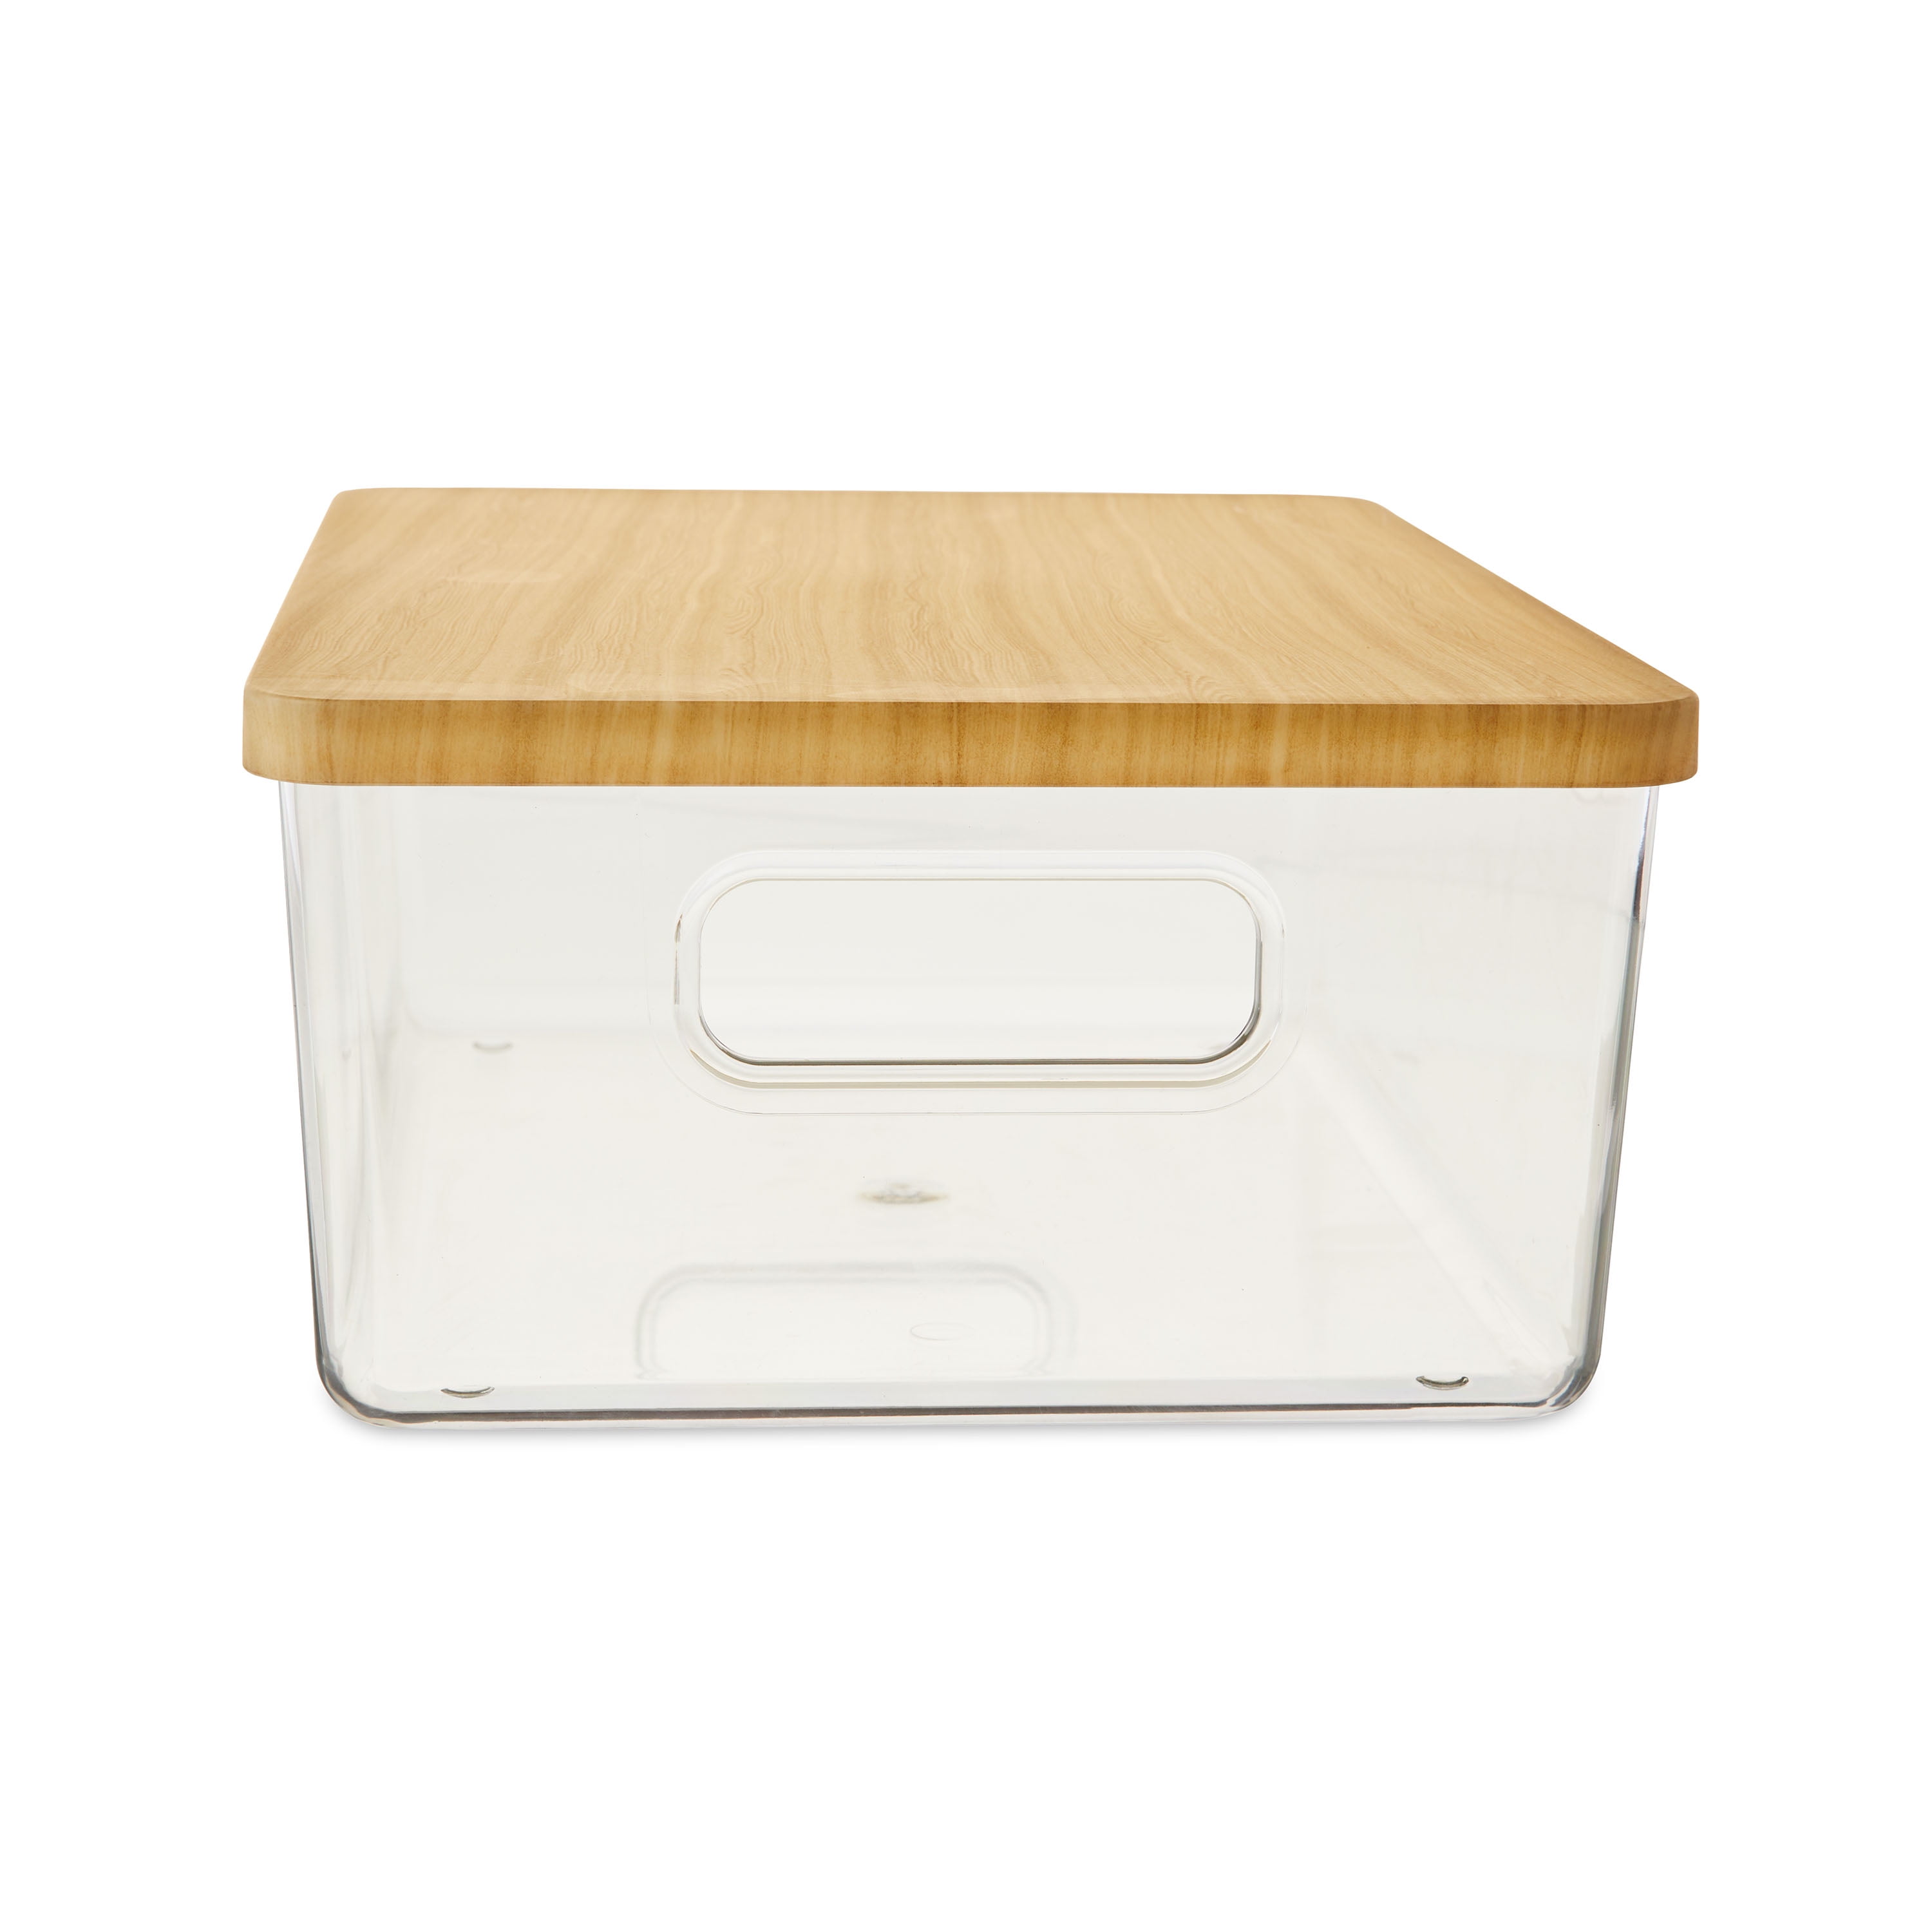 Pen+Gear Organizational Storage Box with Woodgrain Pattern Lid, Clear